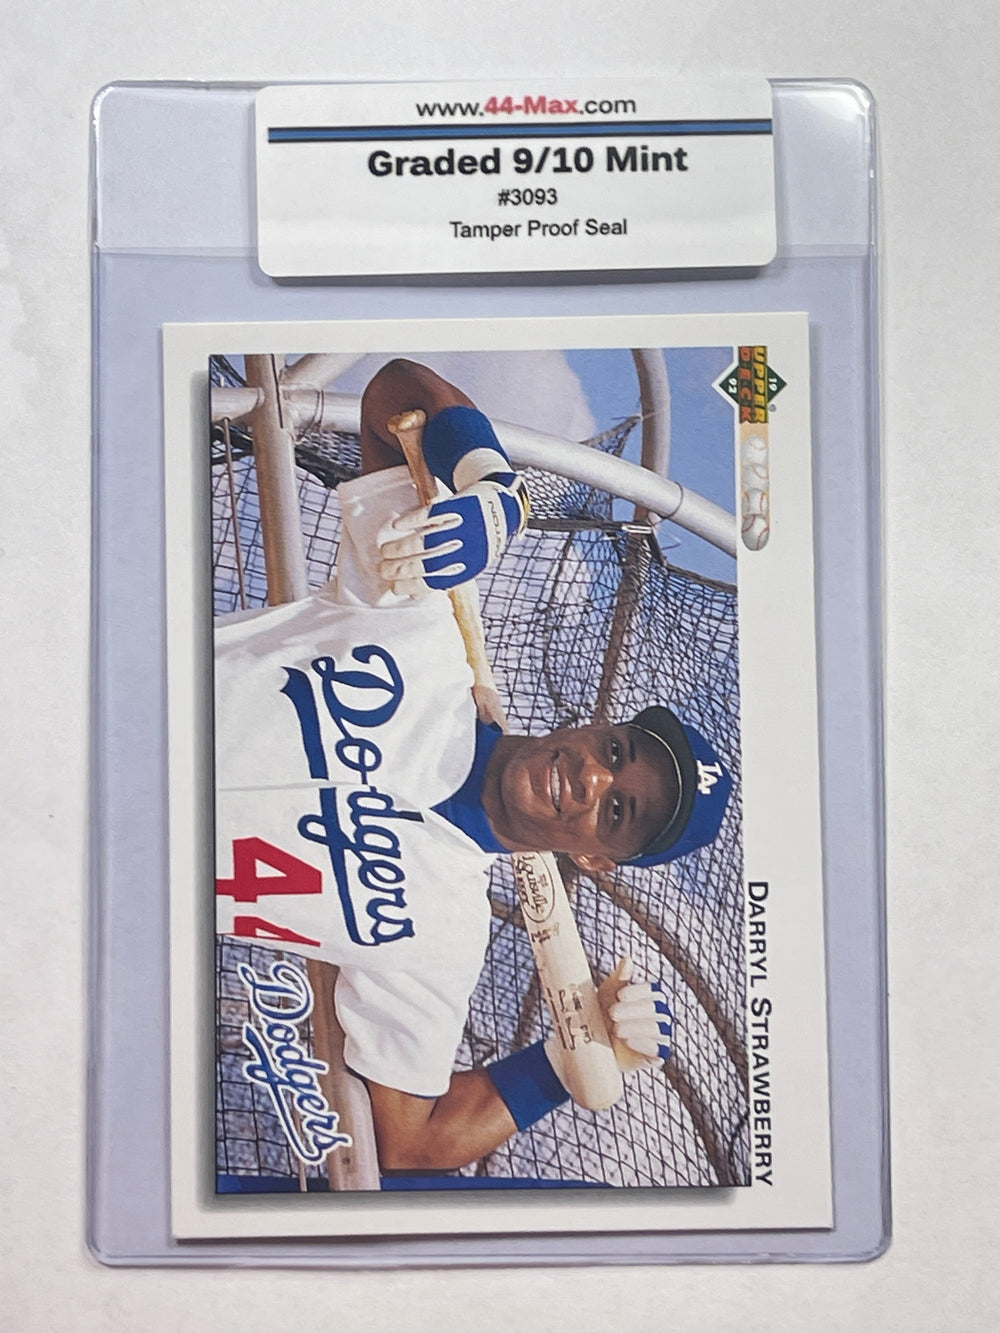 Darryl Strawberry 1992 Upper Deck Baseball Card. 44-Max 9/10 MINT #3093